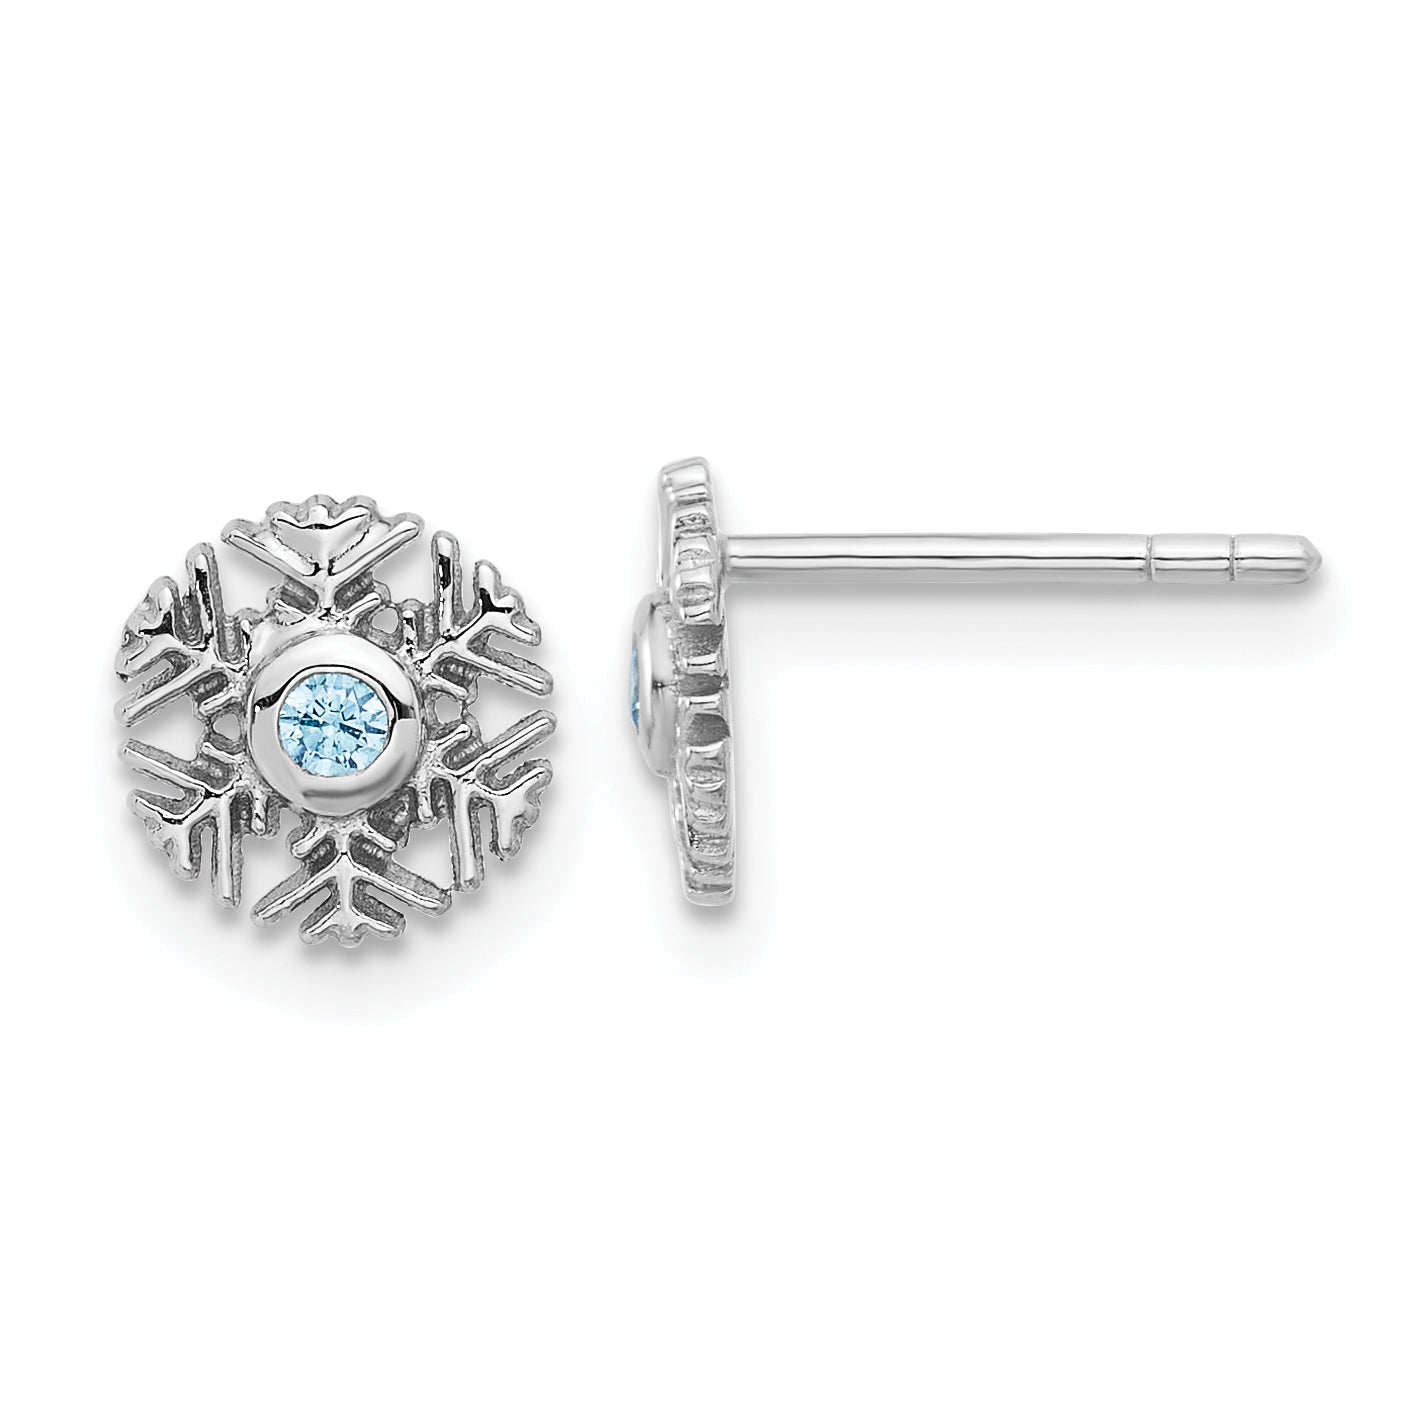 Sterling Silver Rhodium-plated Aqua CZ Snowflake Post Earrings